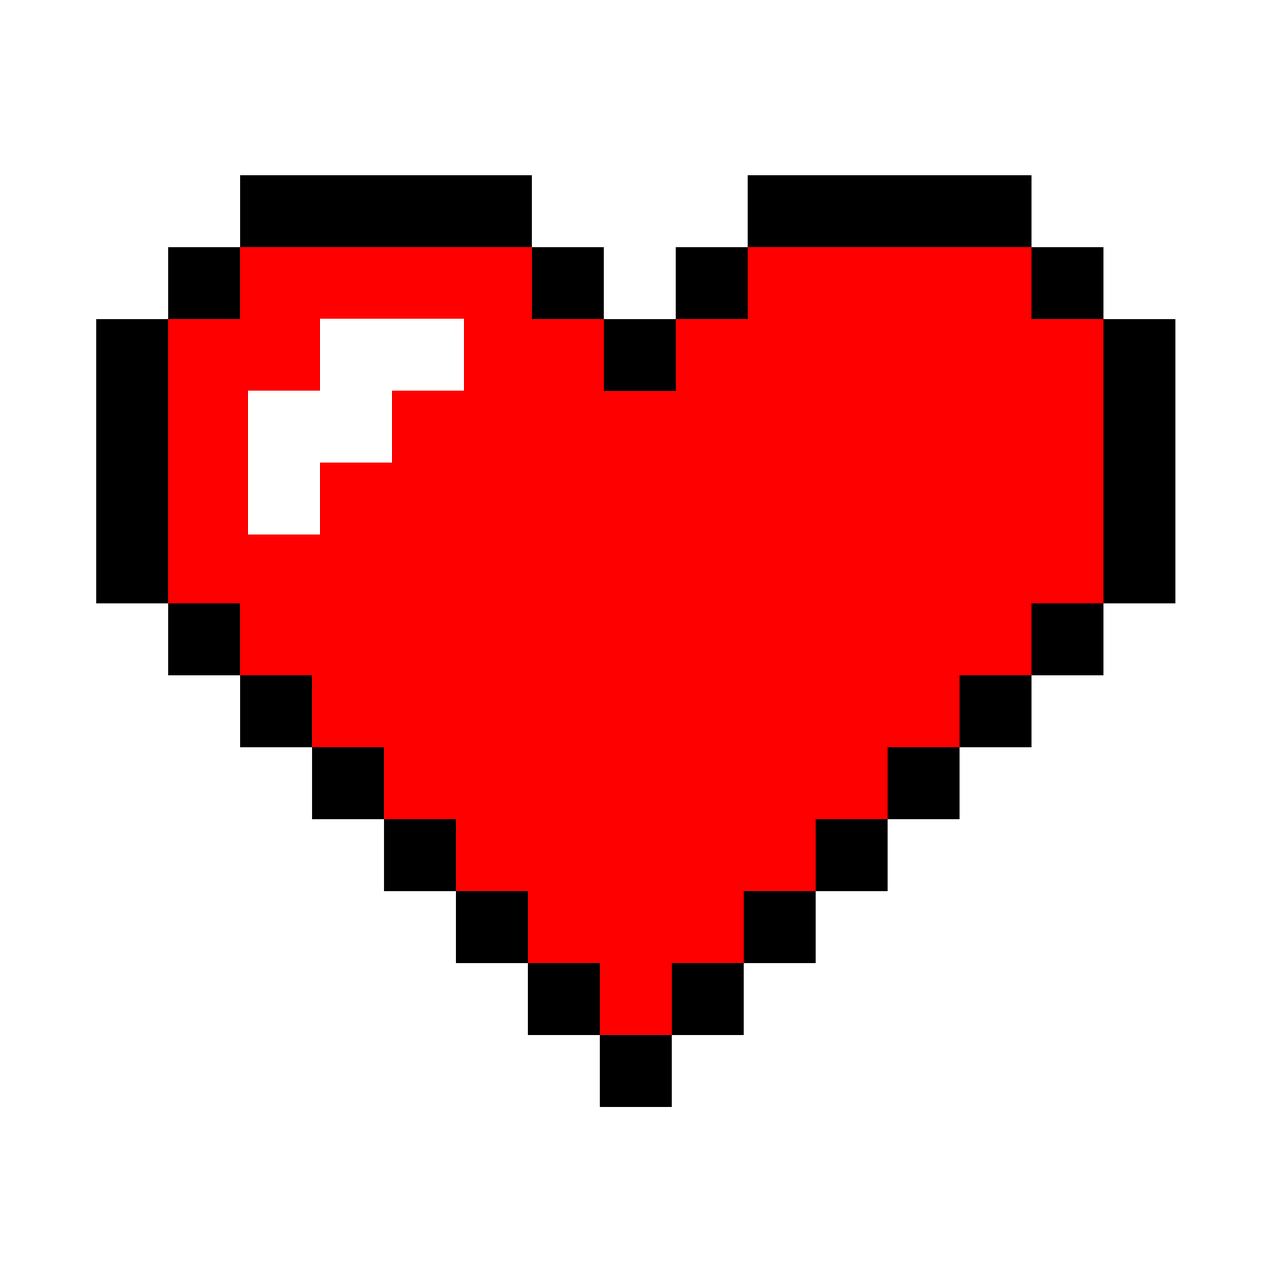 a pixelated heart